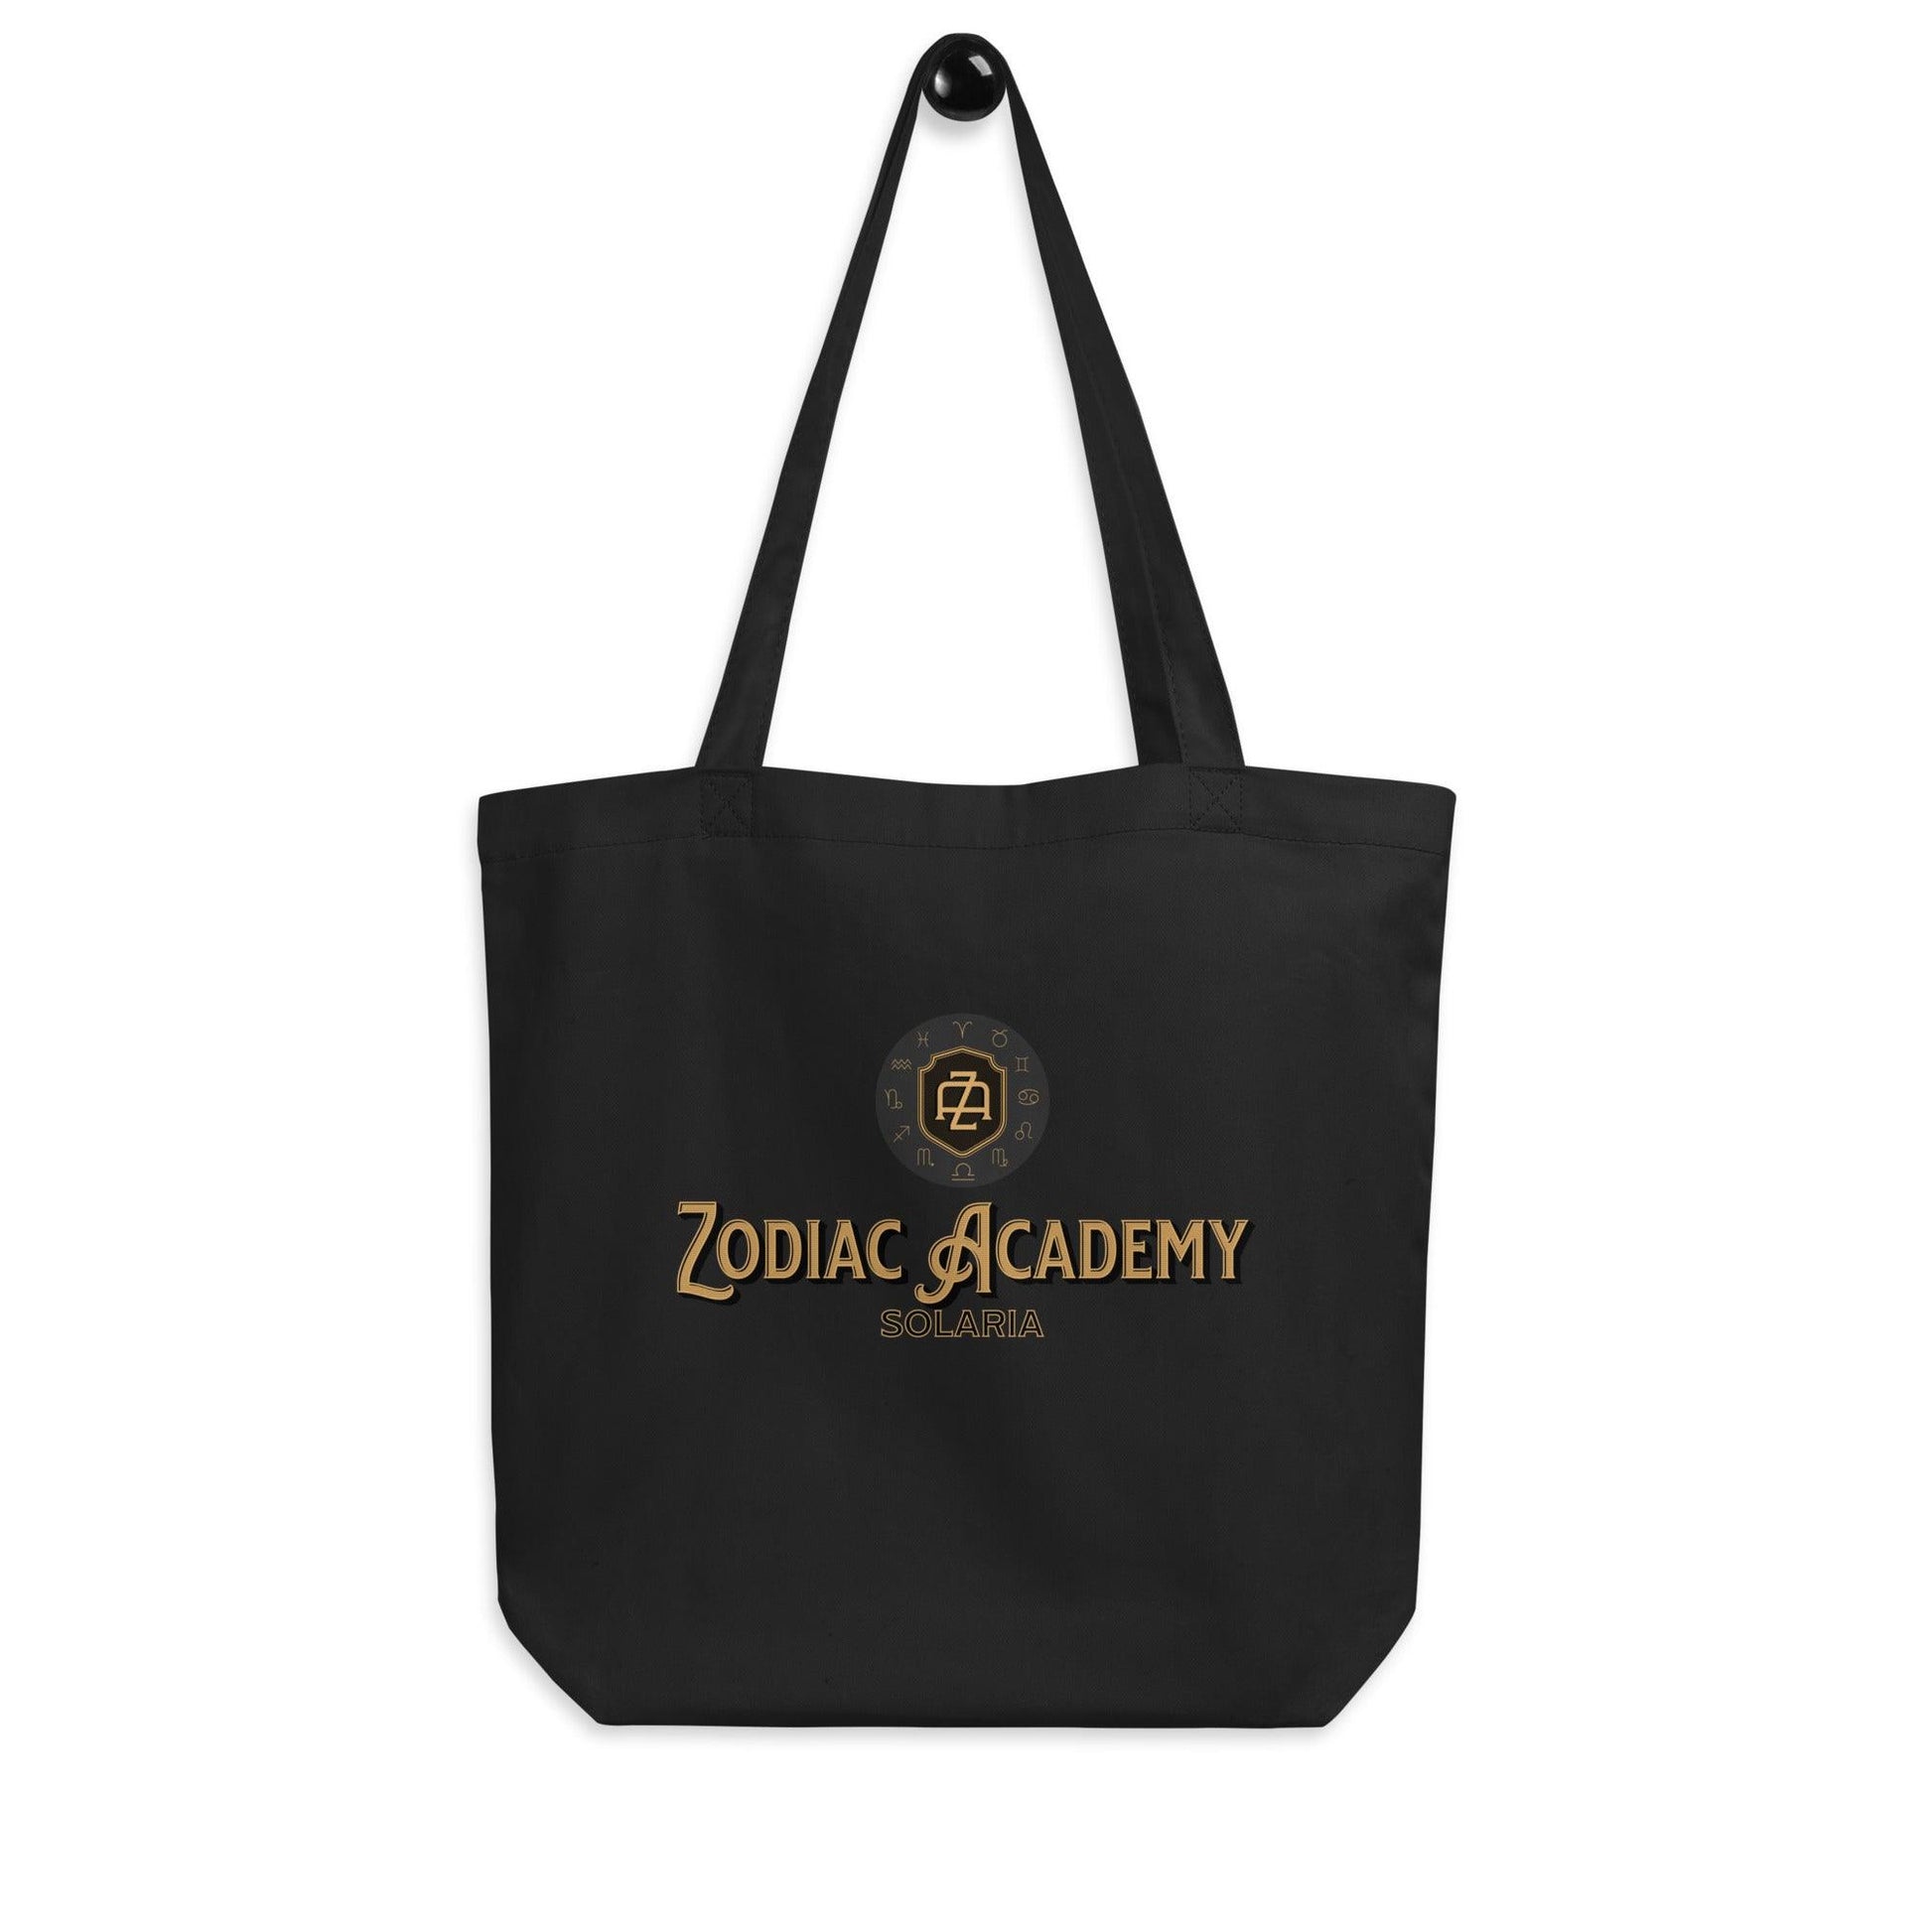 Zodiac Academy Tote Bag - The Bean Workshop - bag, tote, twisted sisters, zodiac academy